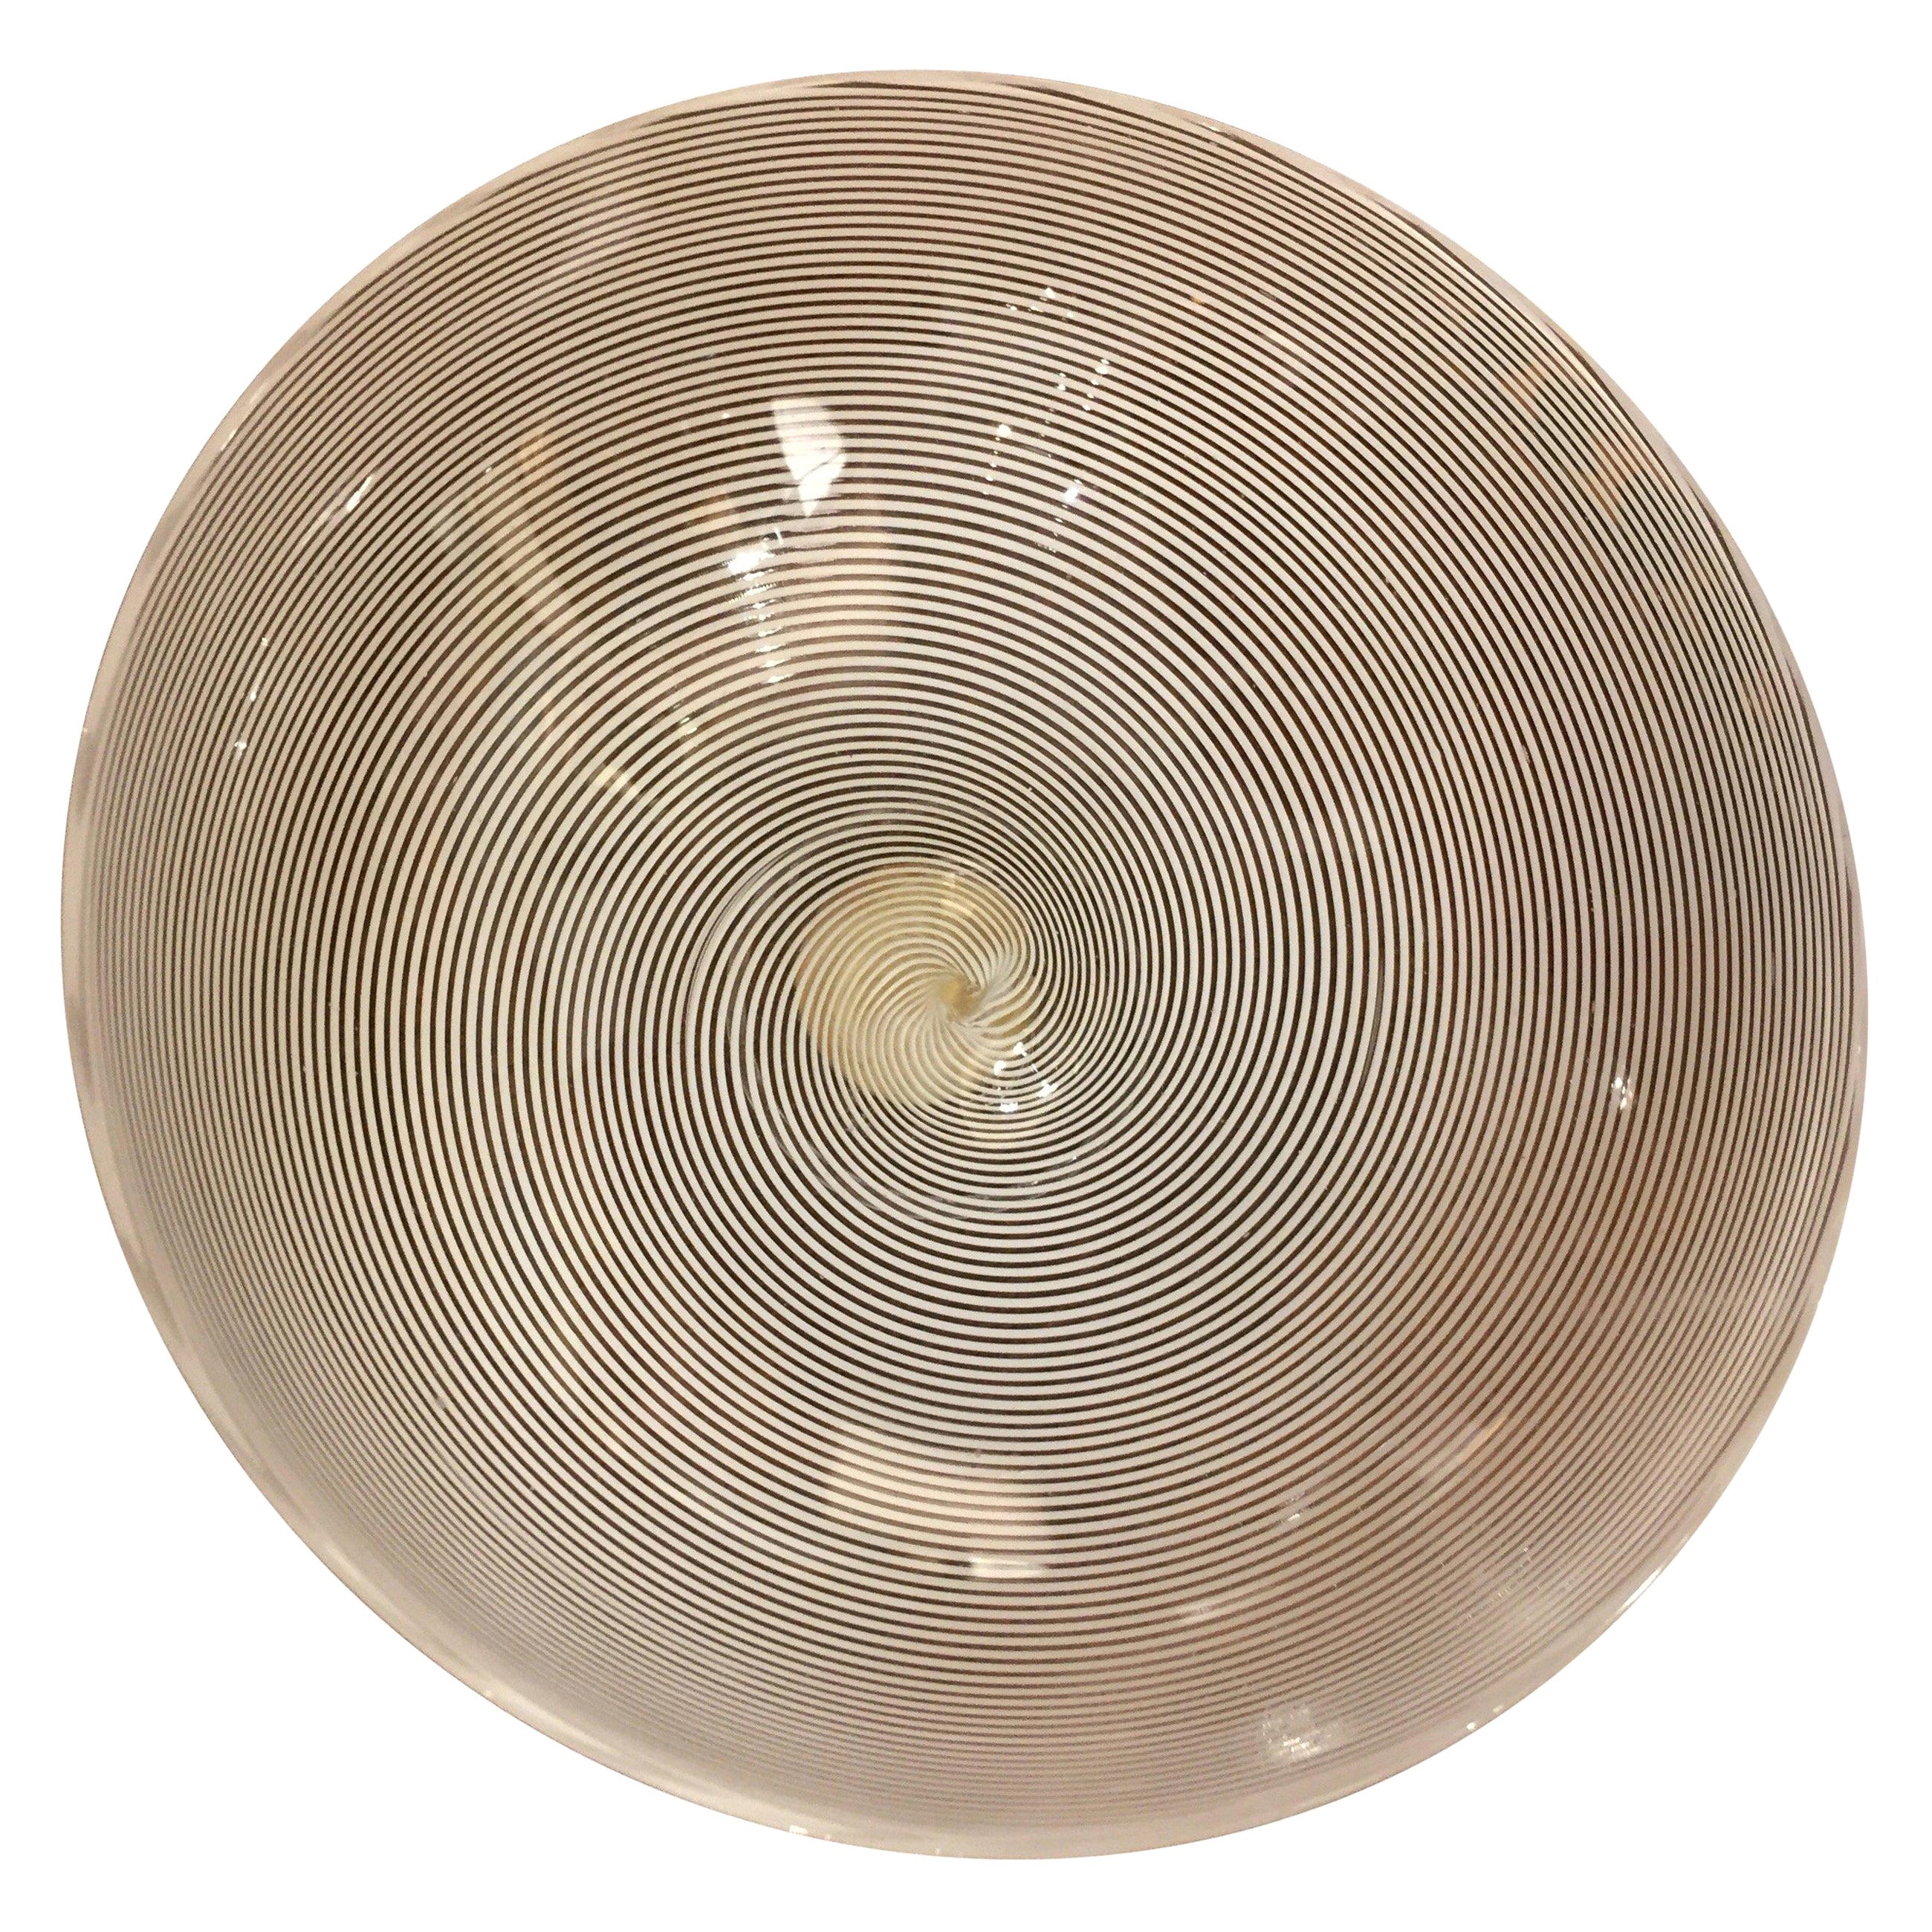 Barovier Toso Murano Art Glass Vide Poche White Spiral Filigree Design, 1950